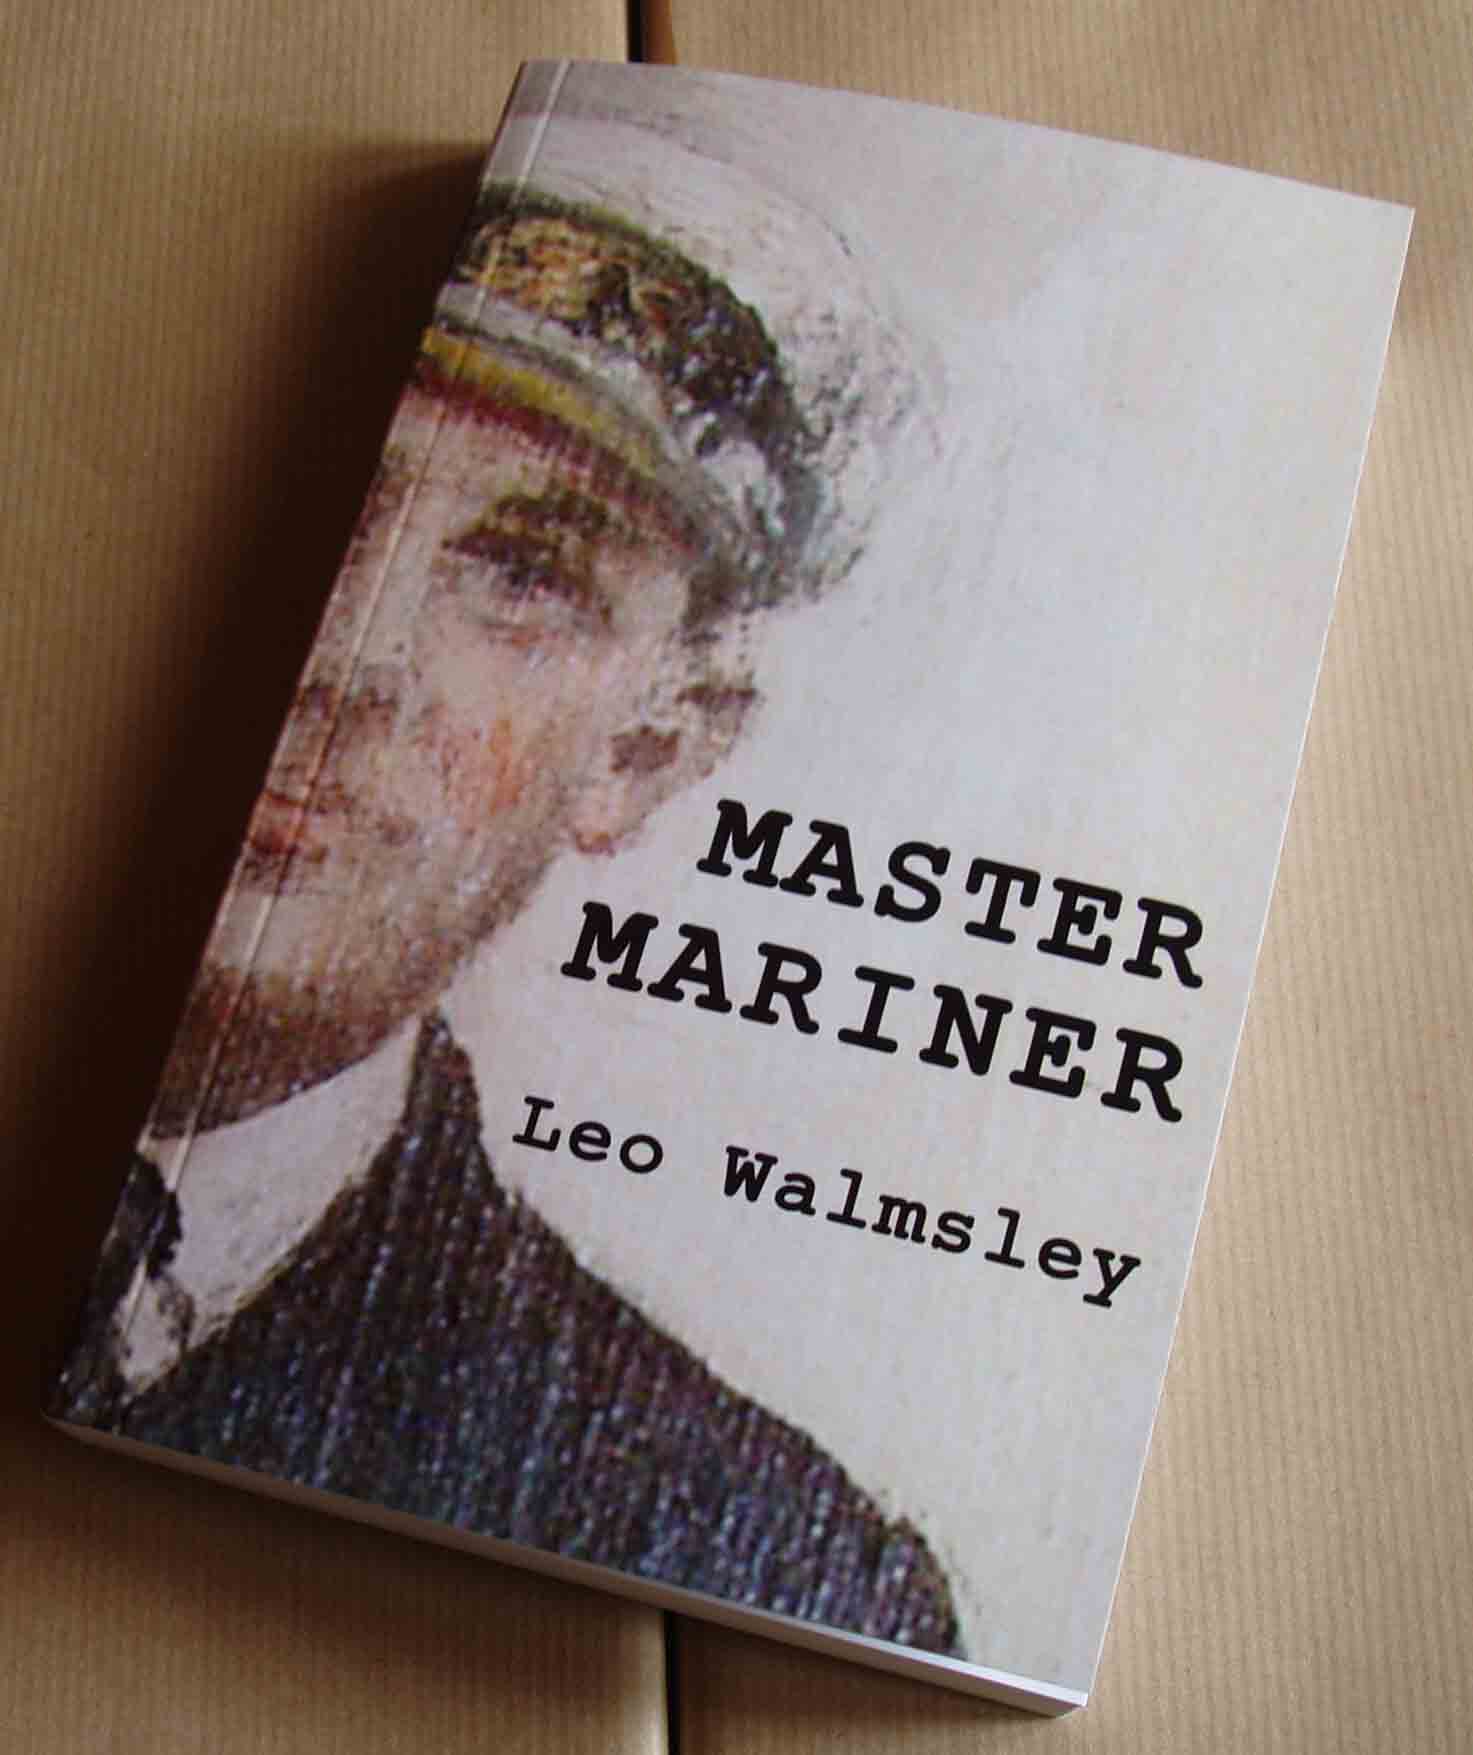 The new Master Mariner